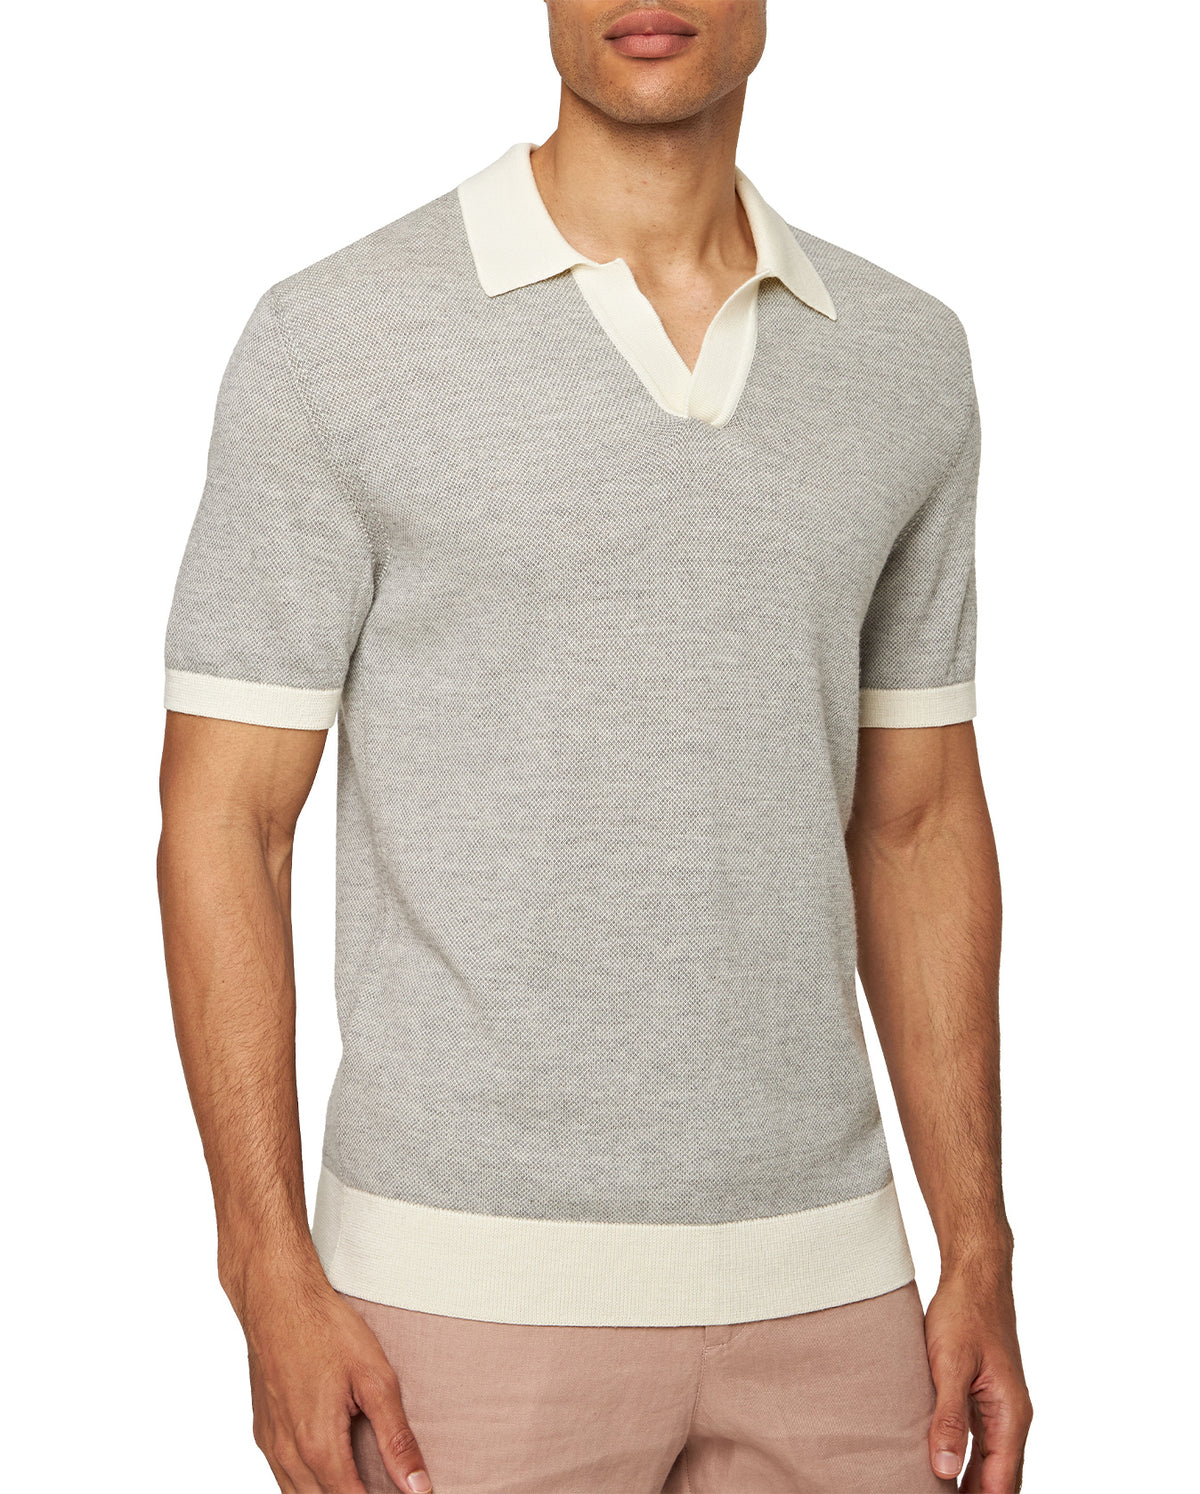 Horton Merino Mixed Texture Polo Shirt